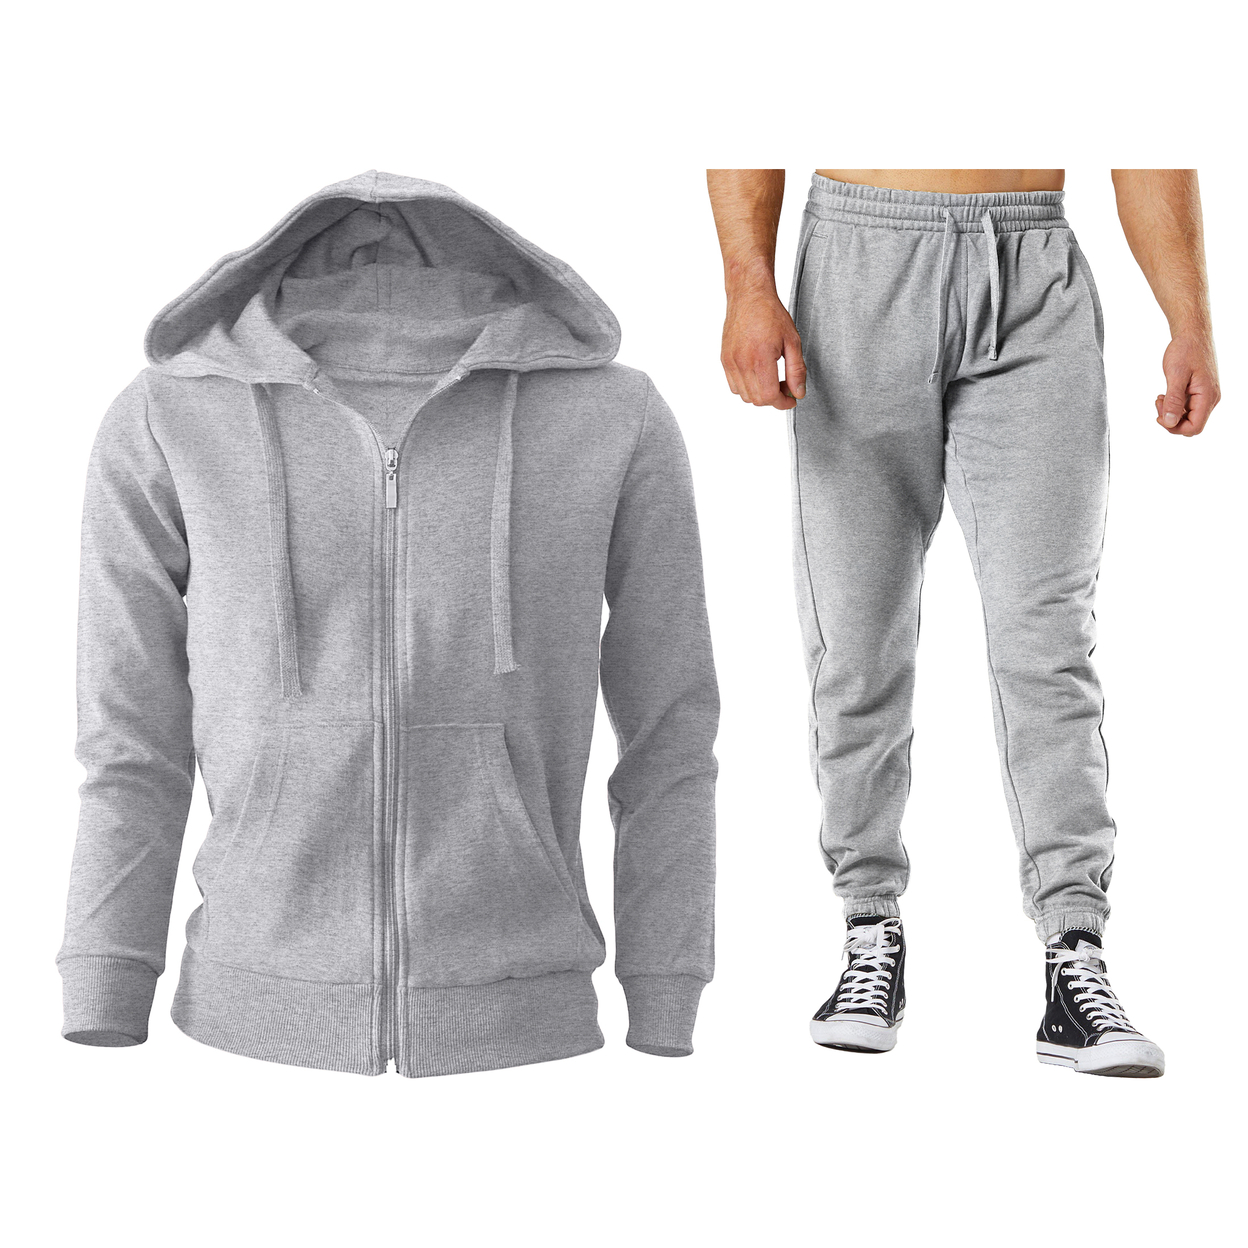 2/4-Piece: Men's Winter Warm Cozy Athletic Multi-Pockets BIG & TALL Sweatsuit Set - Grey, 1, 3xl